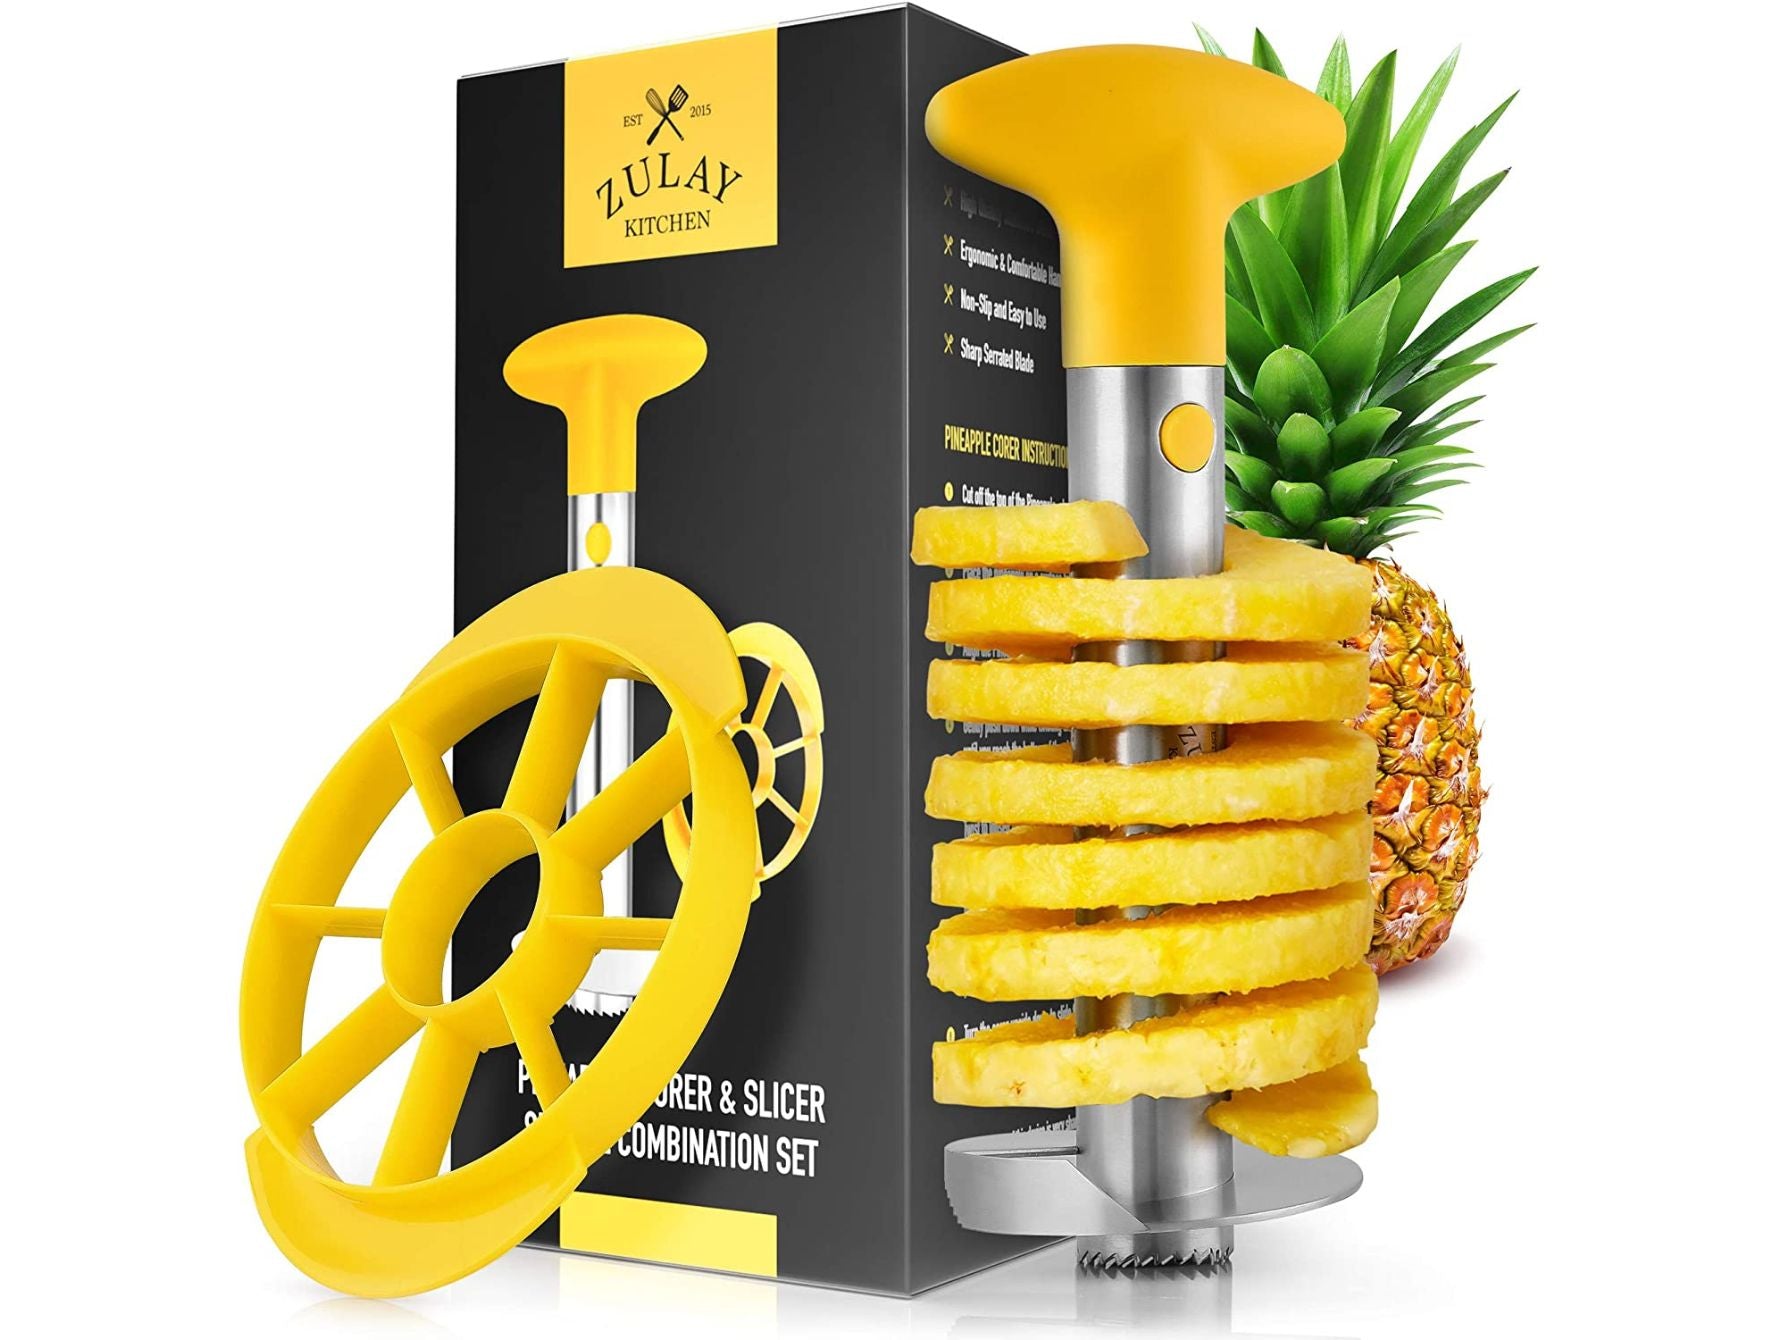 Pineapple Corer and Slicer Tool Set